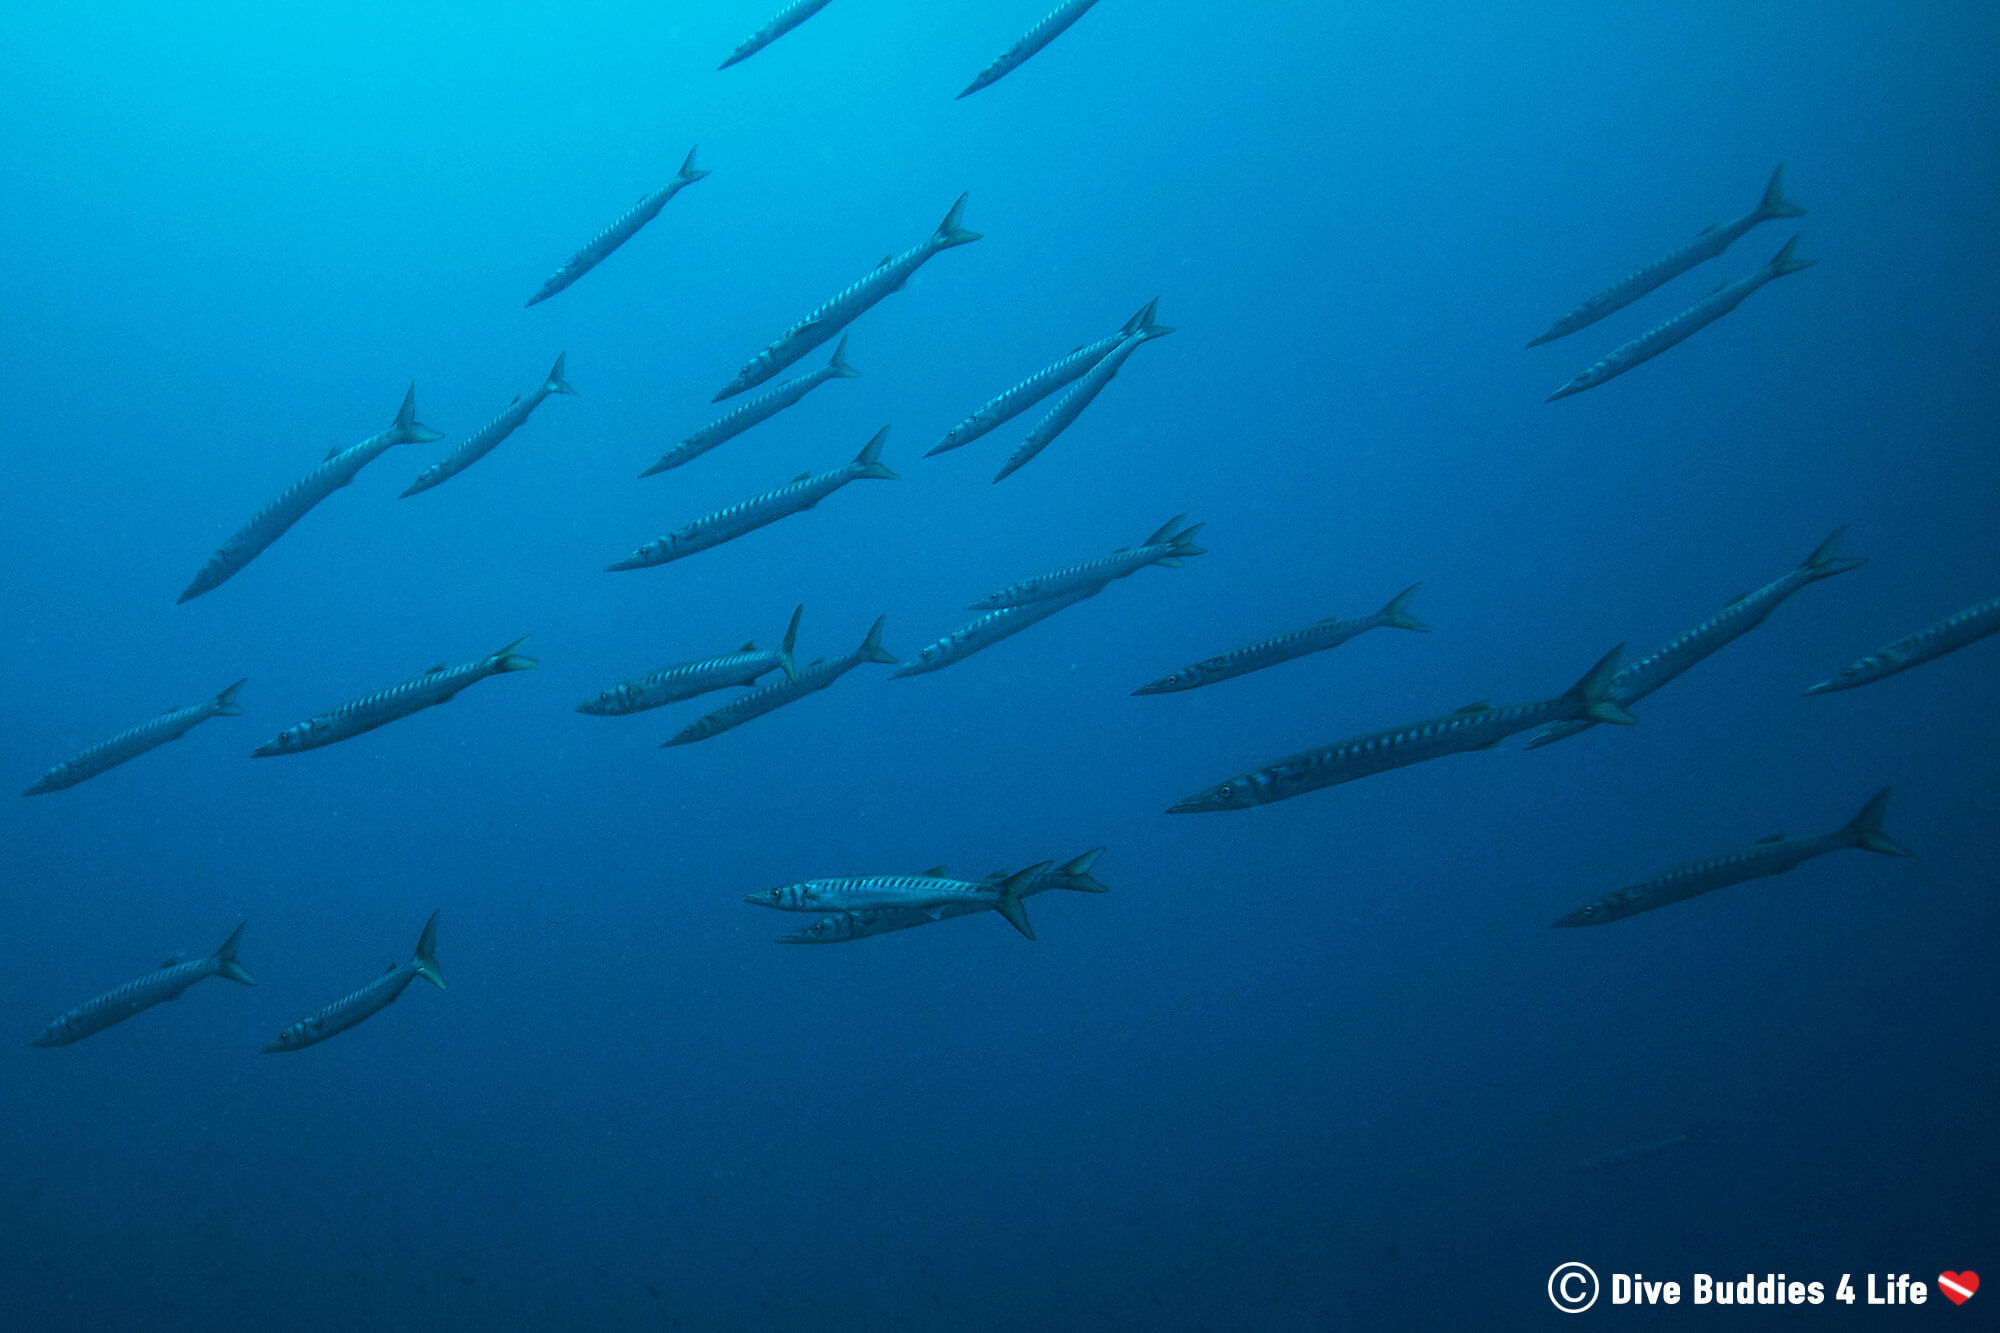 A School Of Silver Striped Barracuda Seen Scuba Diving The Amalfi Coast Of Italy, Europe